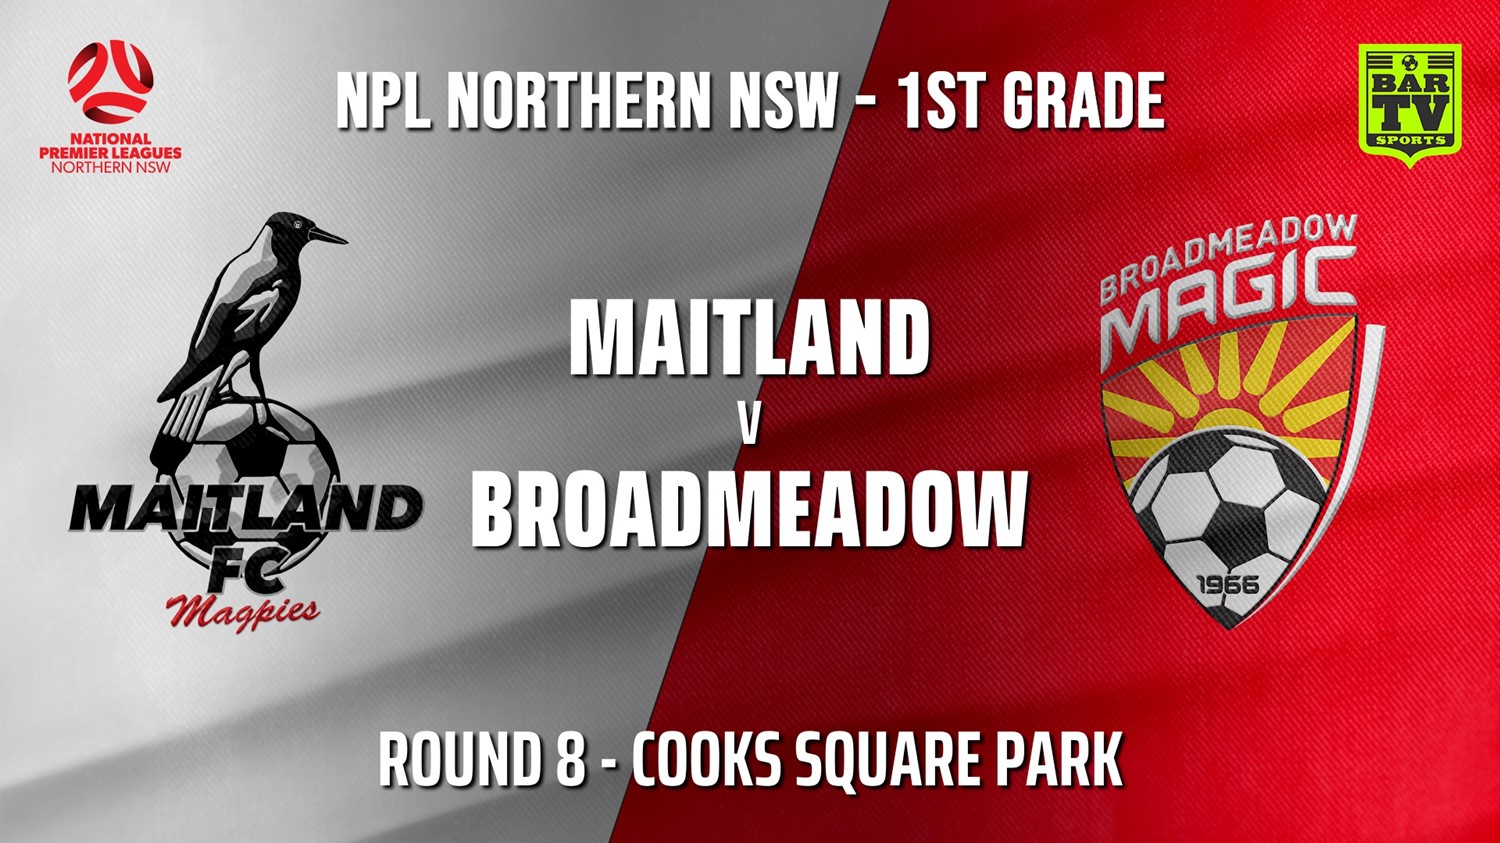 210521-NPL - NNSW Round 8 - Maitland FC v Broadmeadow Magic Minigame Slate Image